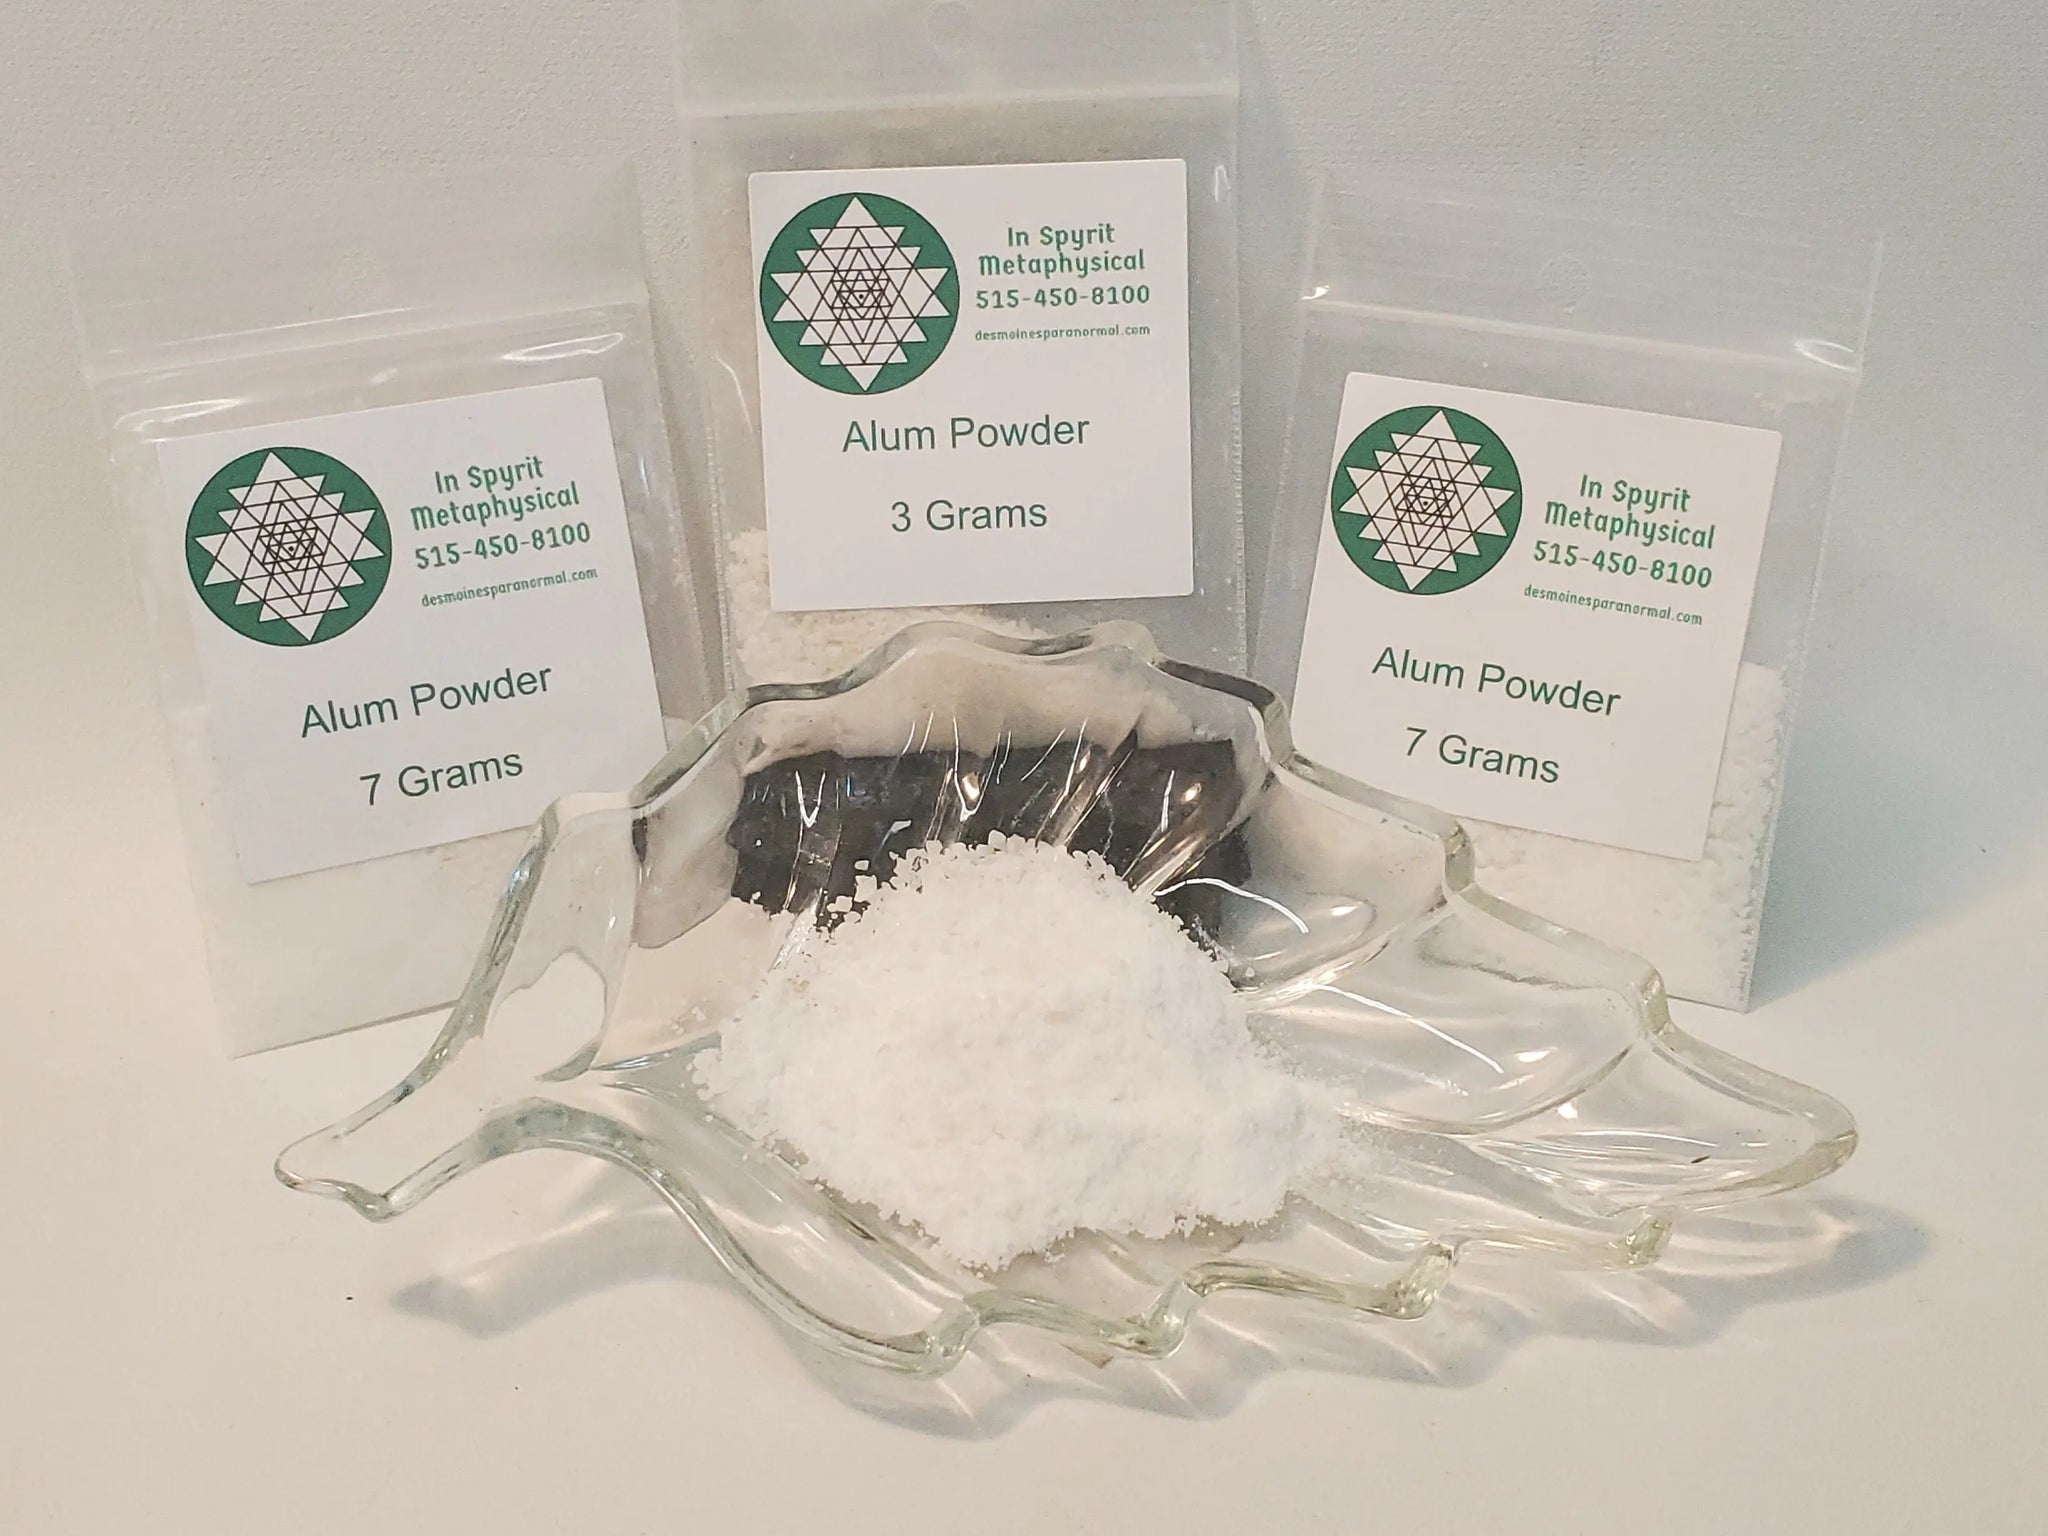 13 Surprising Alum Powder Uses and Benefits